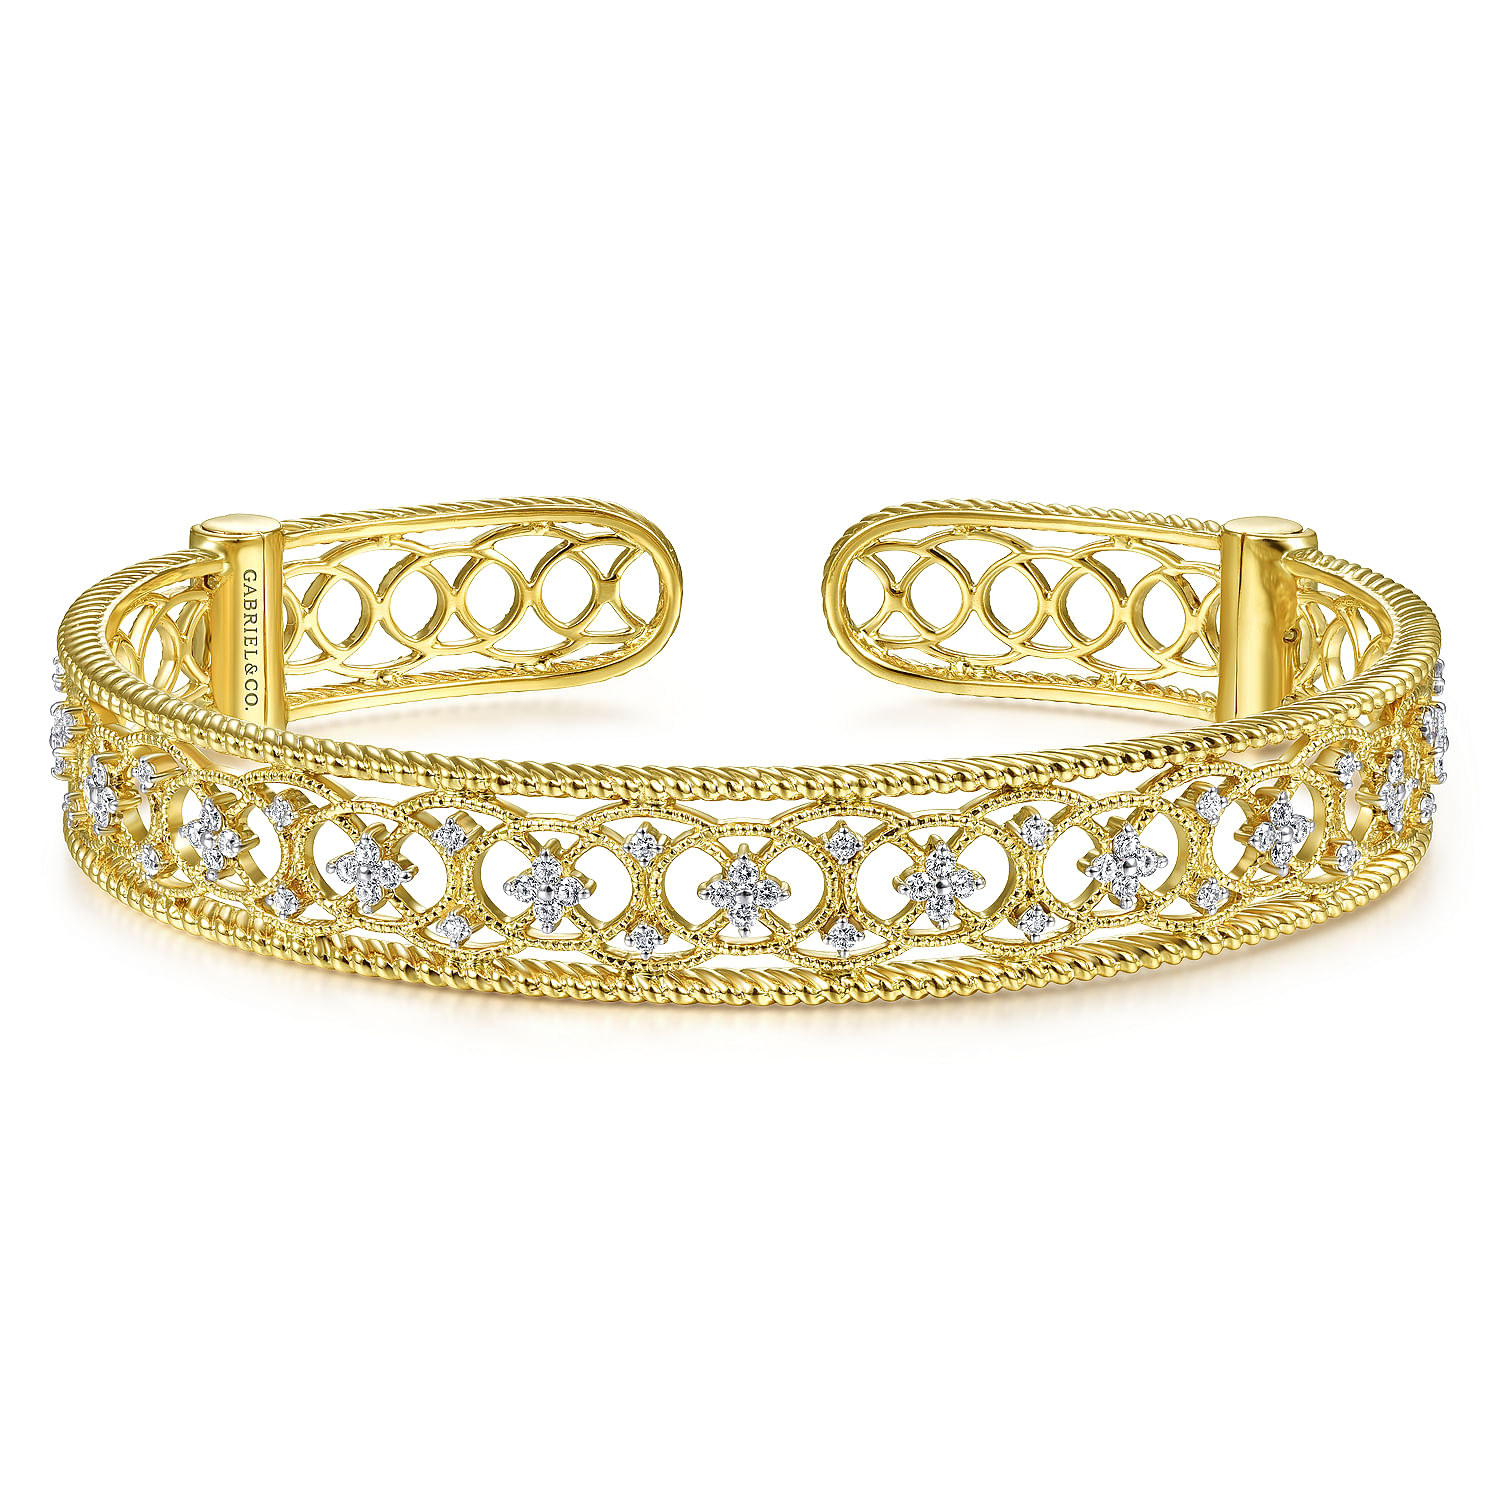 Vintage Inspired 14K Yellow Gold Filigree Diamond Cuff Bracelet